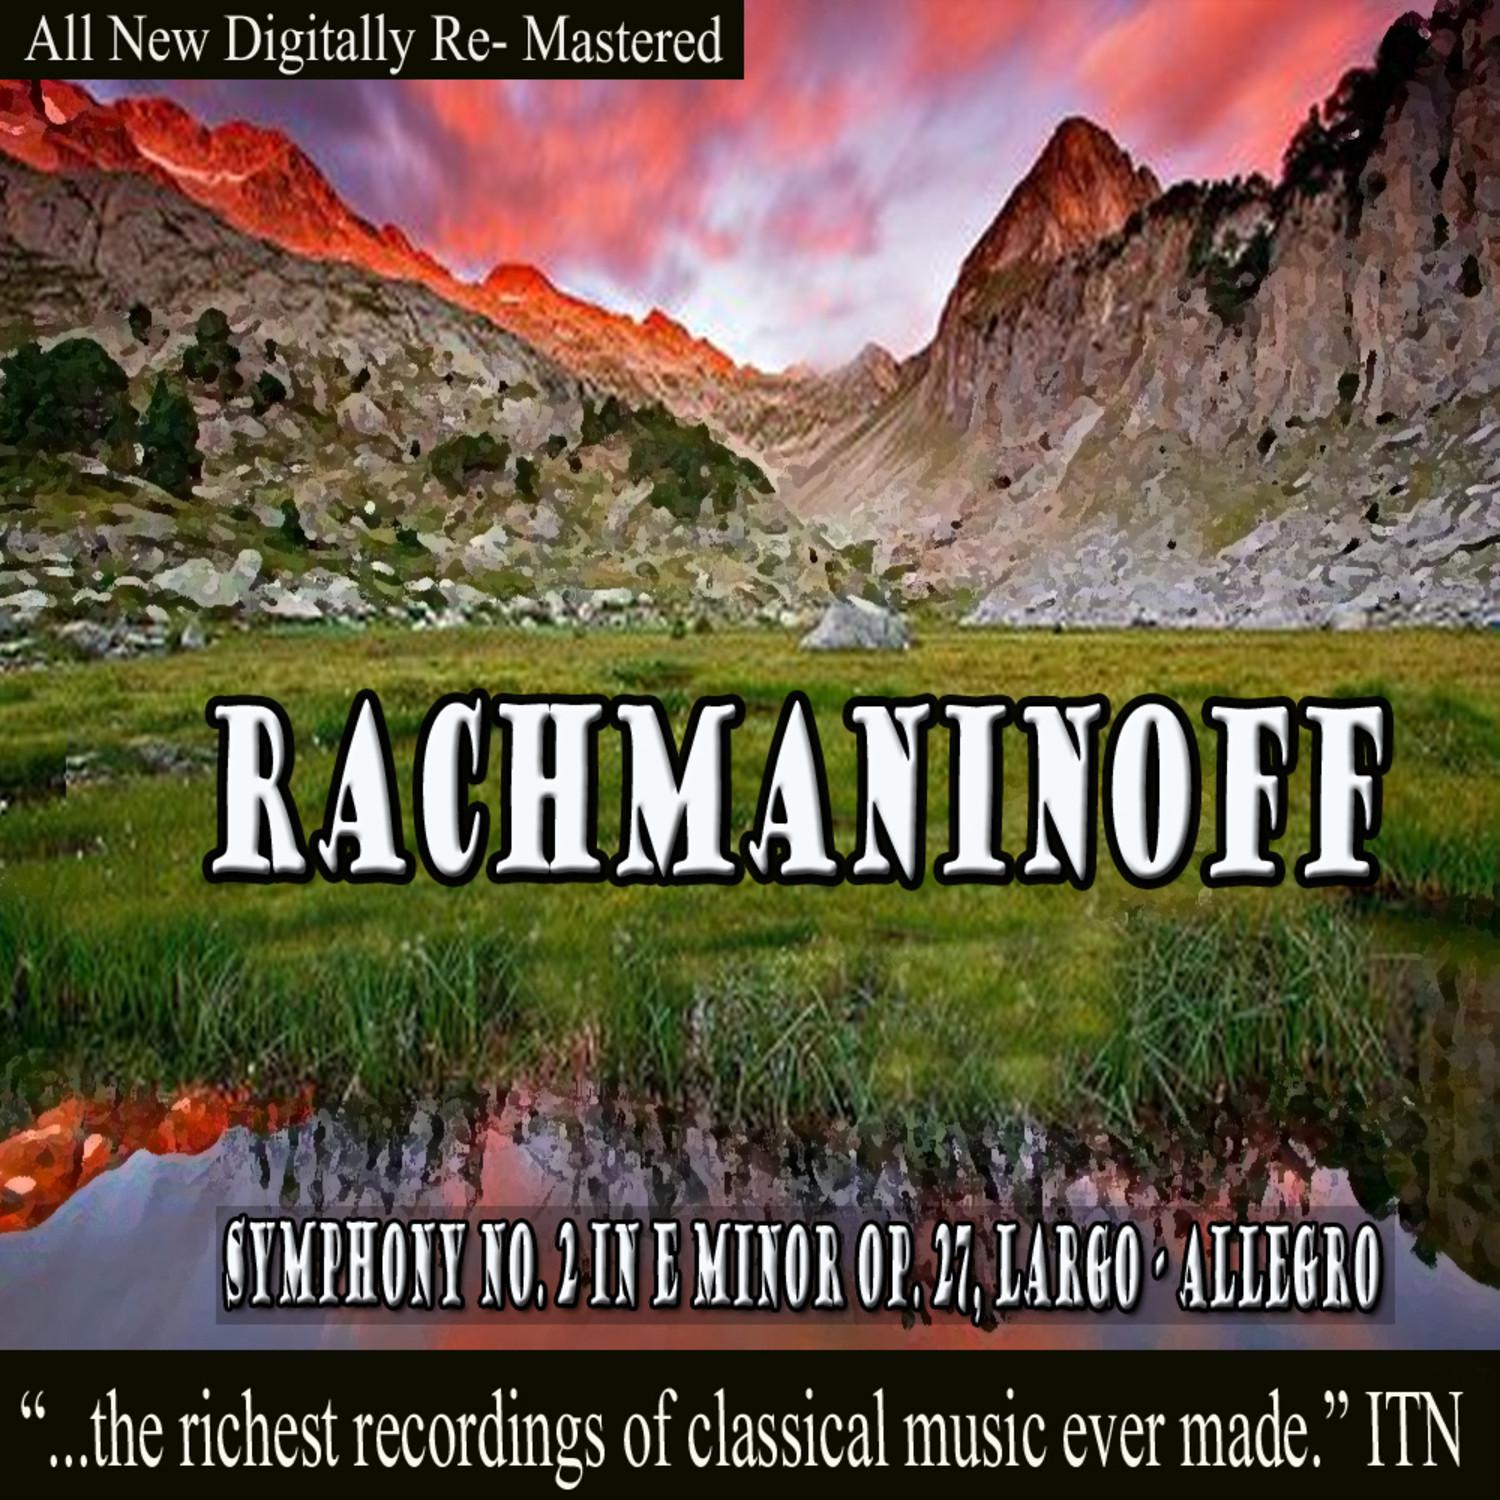 Rachmaninoff Symphony No. 2 in E Minor